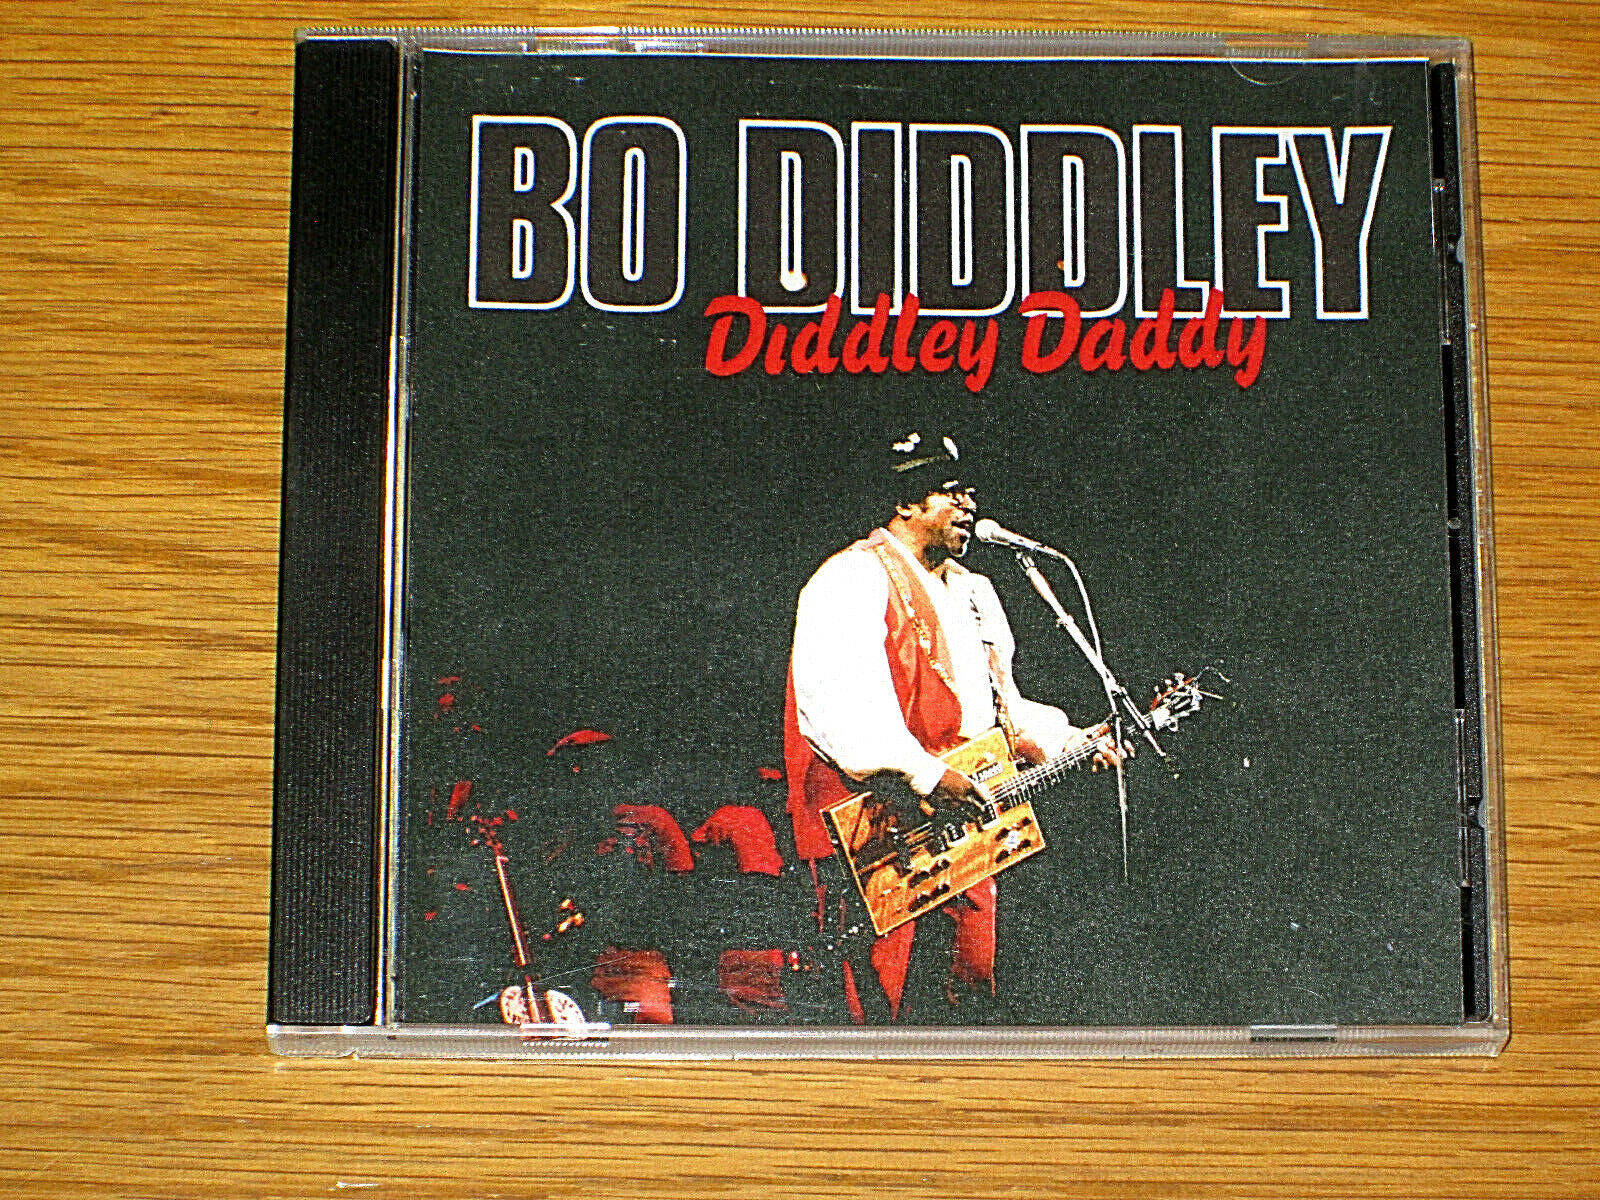 Diddley Daddy CD album af Bo Diddley Wallpaper